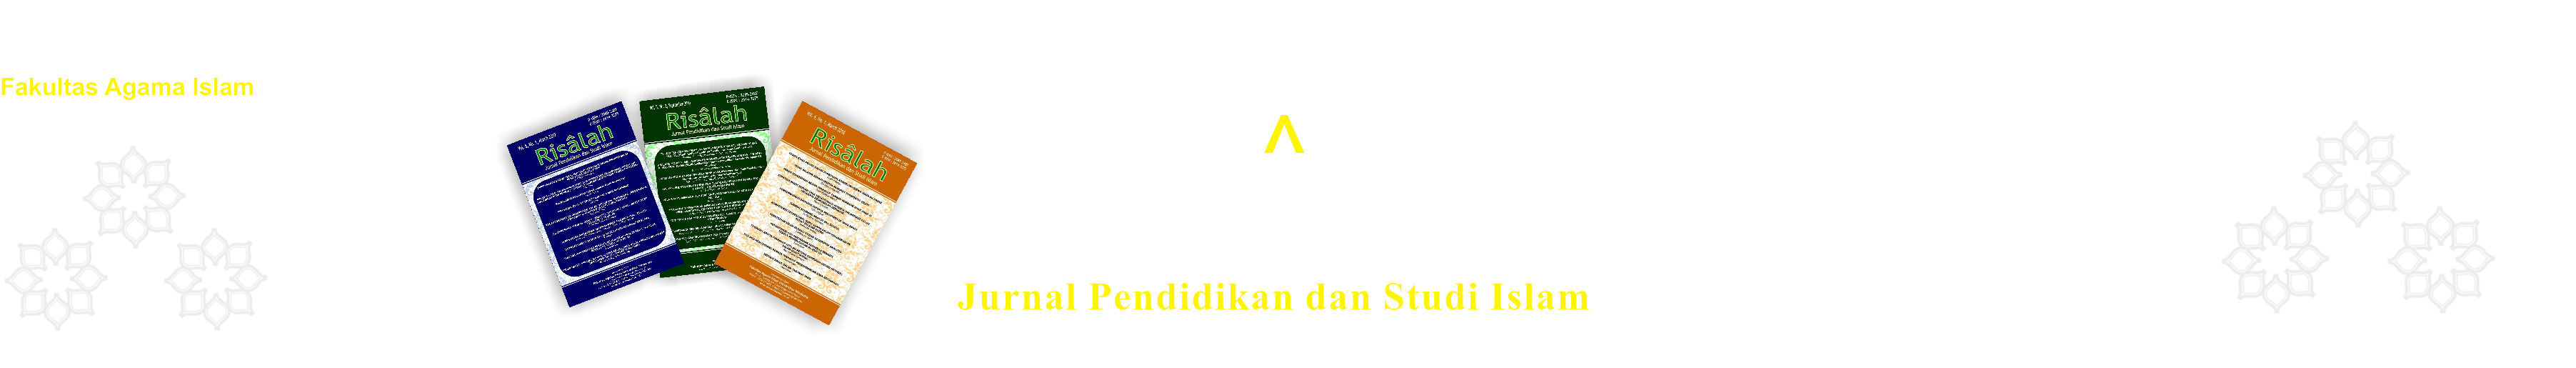 Risalah, Jurnal Pendidikan dan Studi Islam